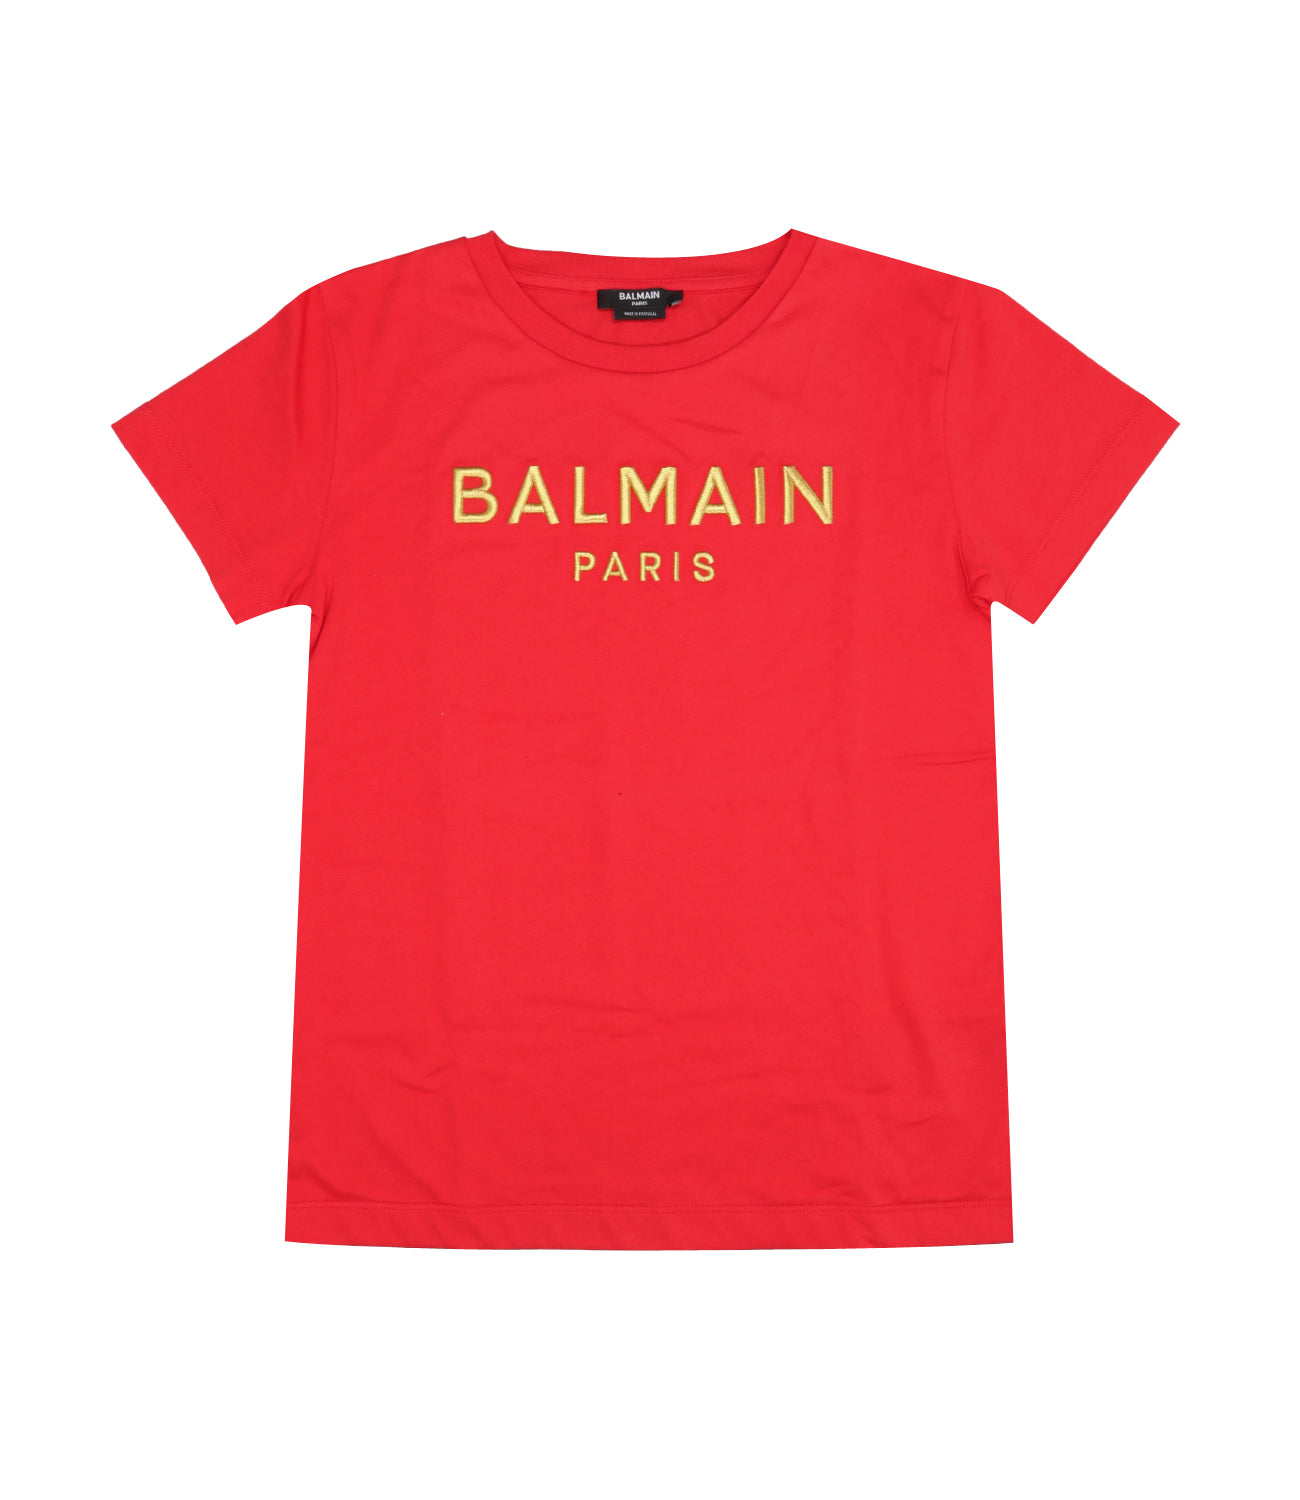 Balmain Kids | Red and Gold T-Shirt